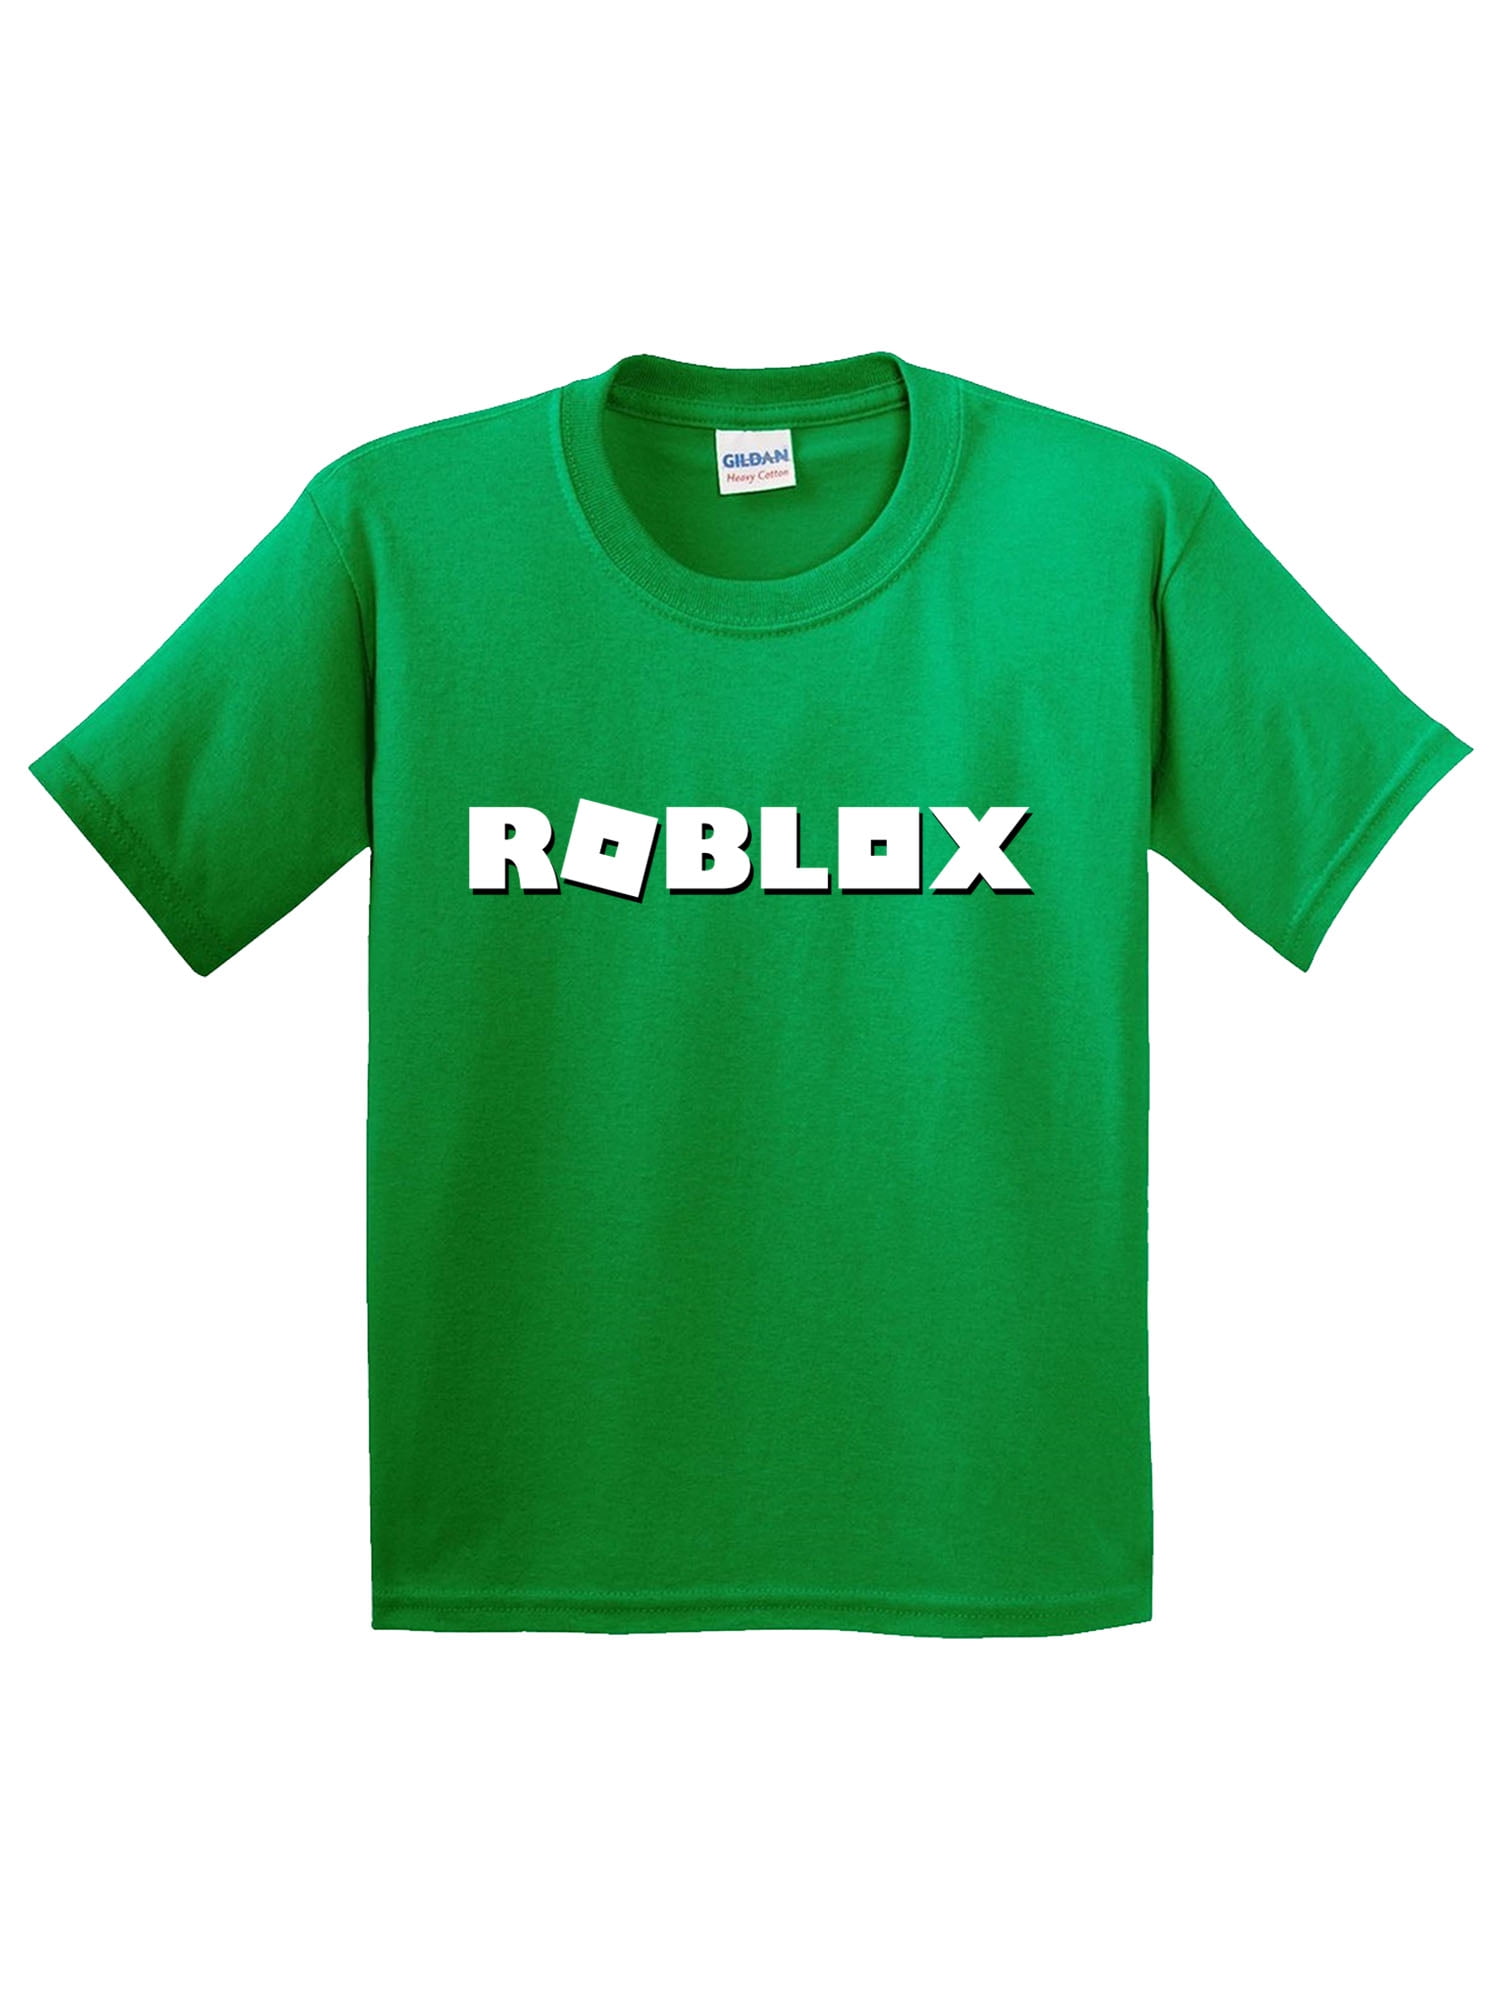 Roblox Shirts Walmart Tissino - girl nike shirt roblox nikes girl roblox shirt shirts